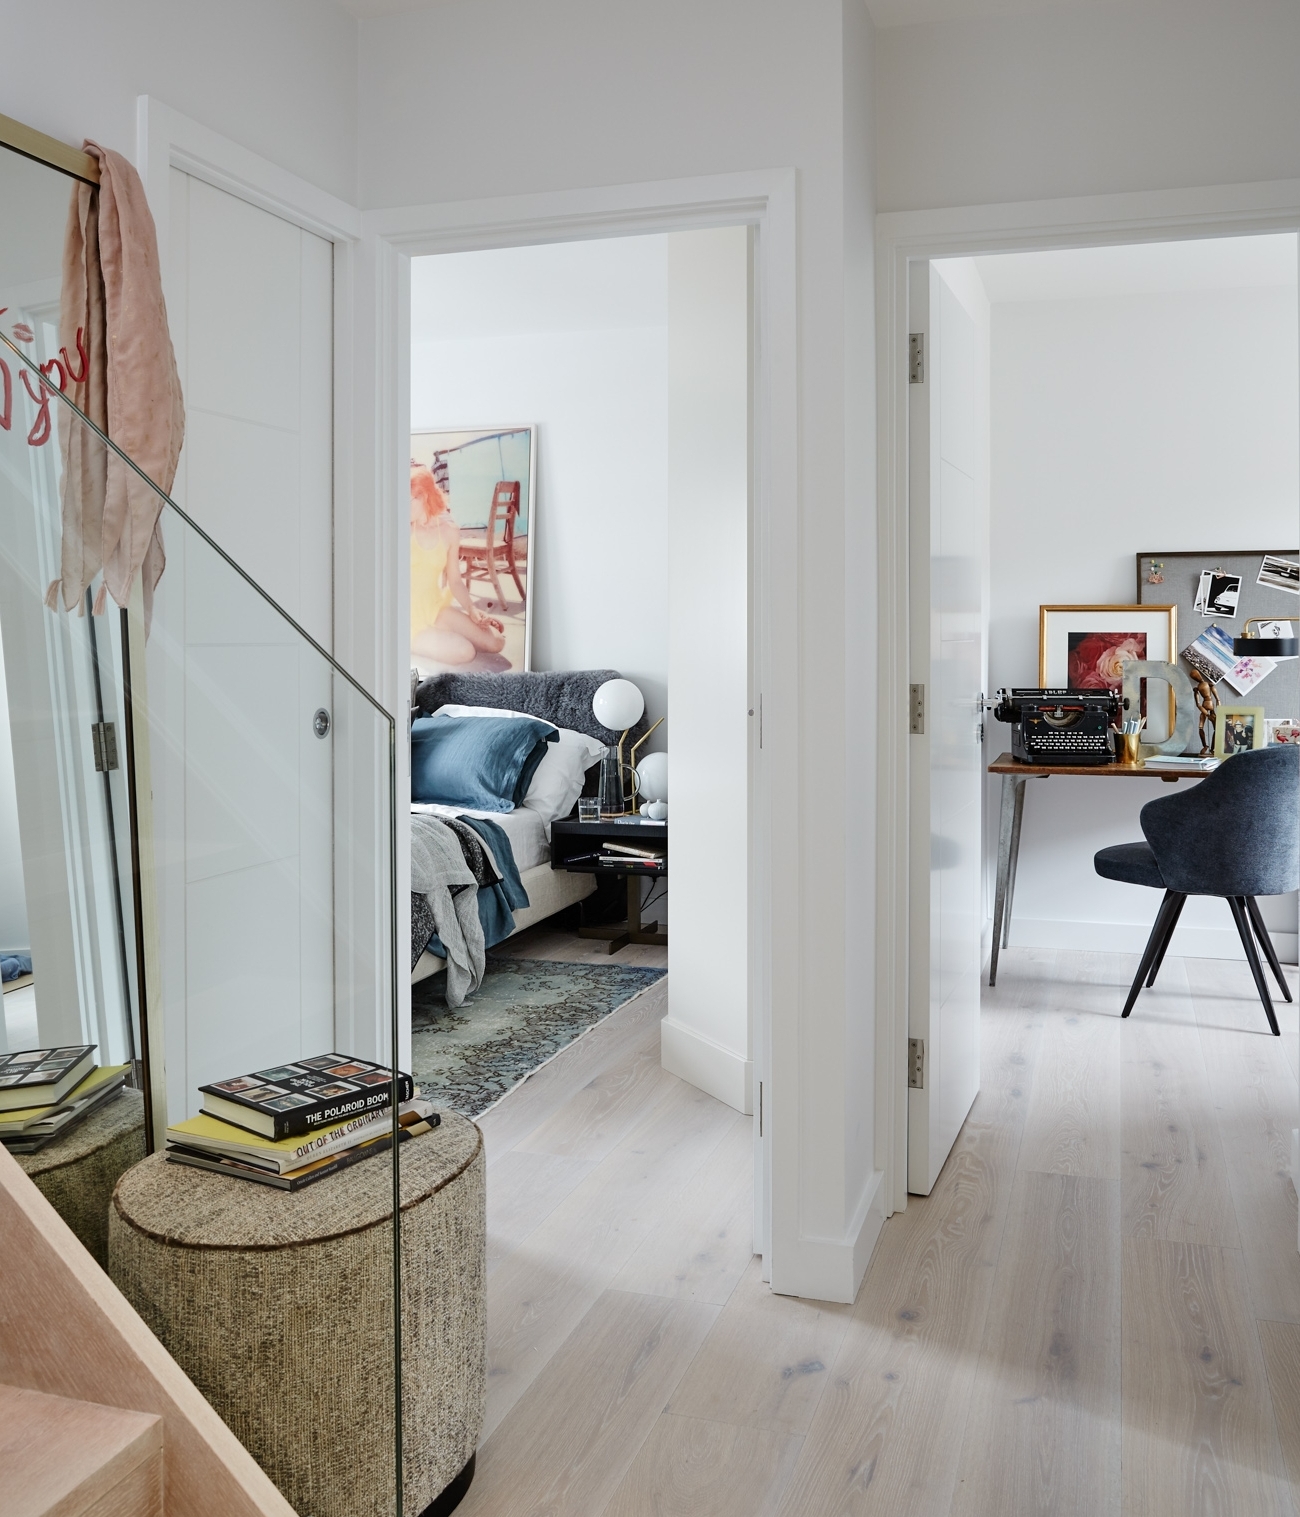 Deze elegante slaapkamer is ingericht als een Parisienne boutique hotel